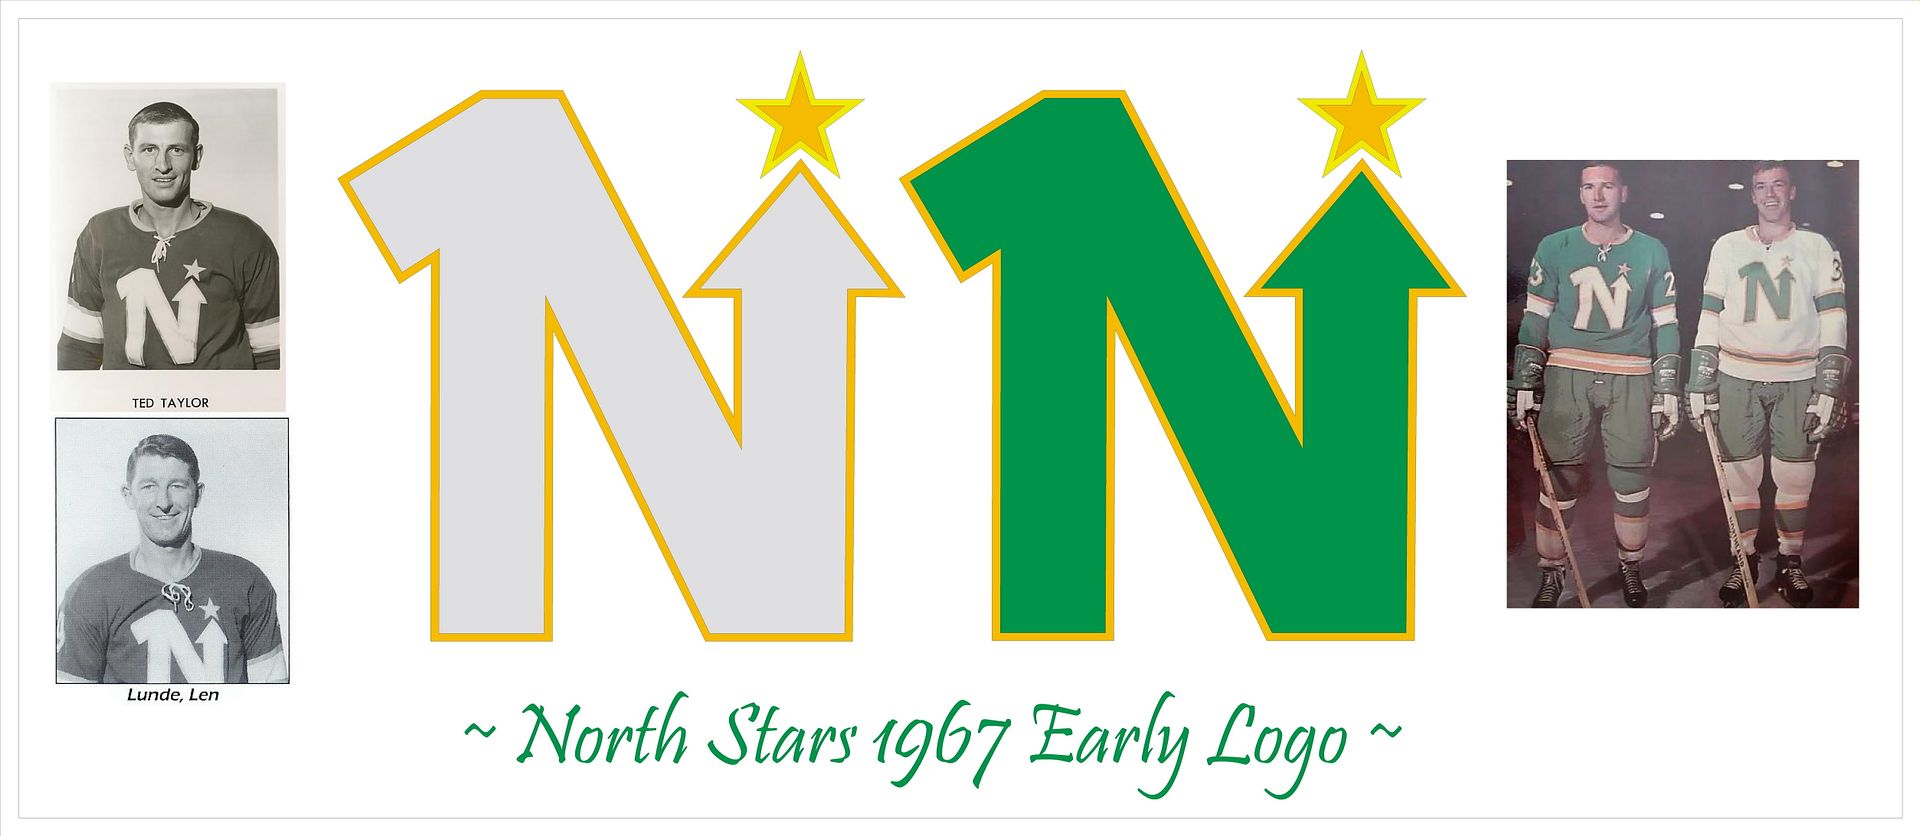 NorthStarsPre-Season1967Logo-1.jpg